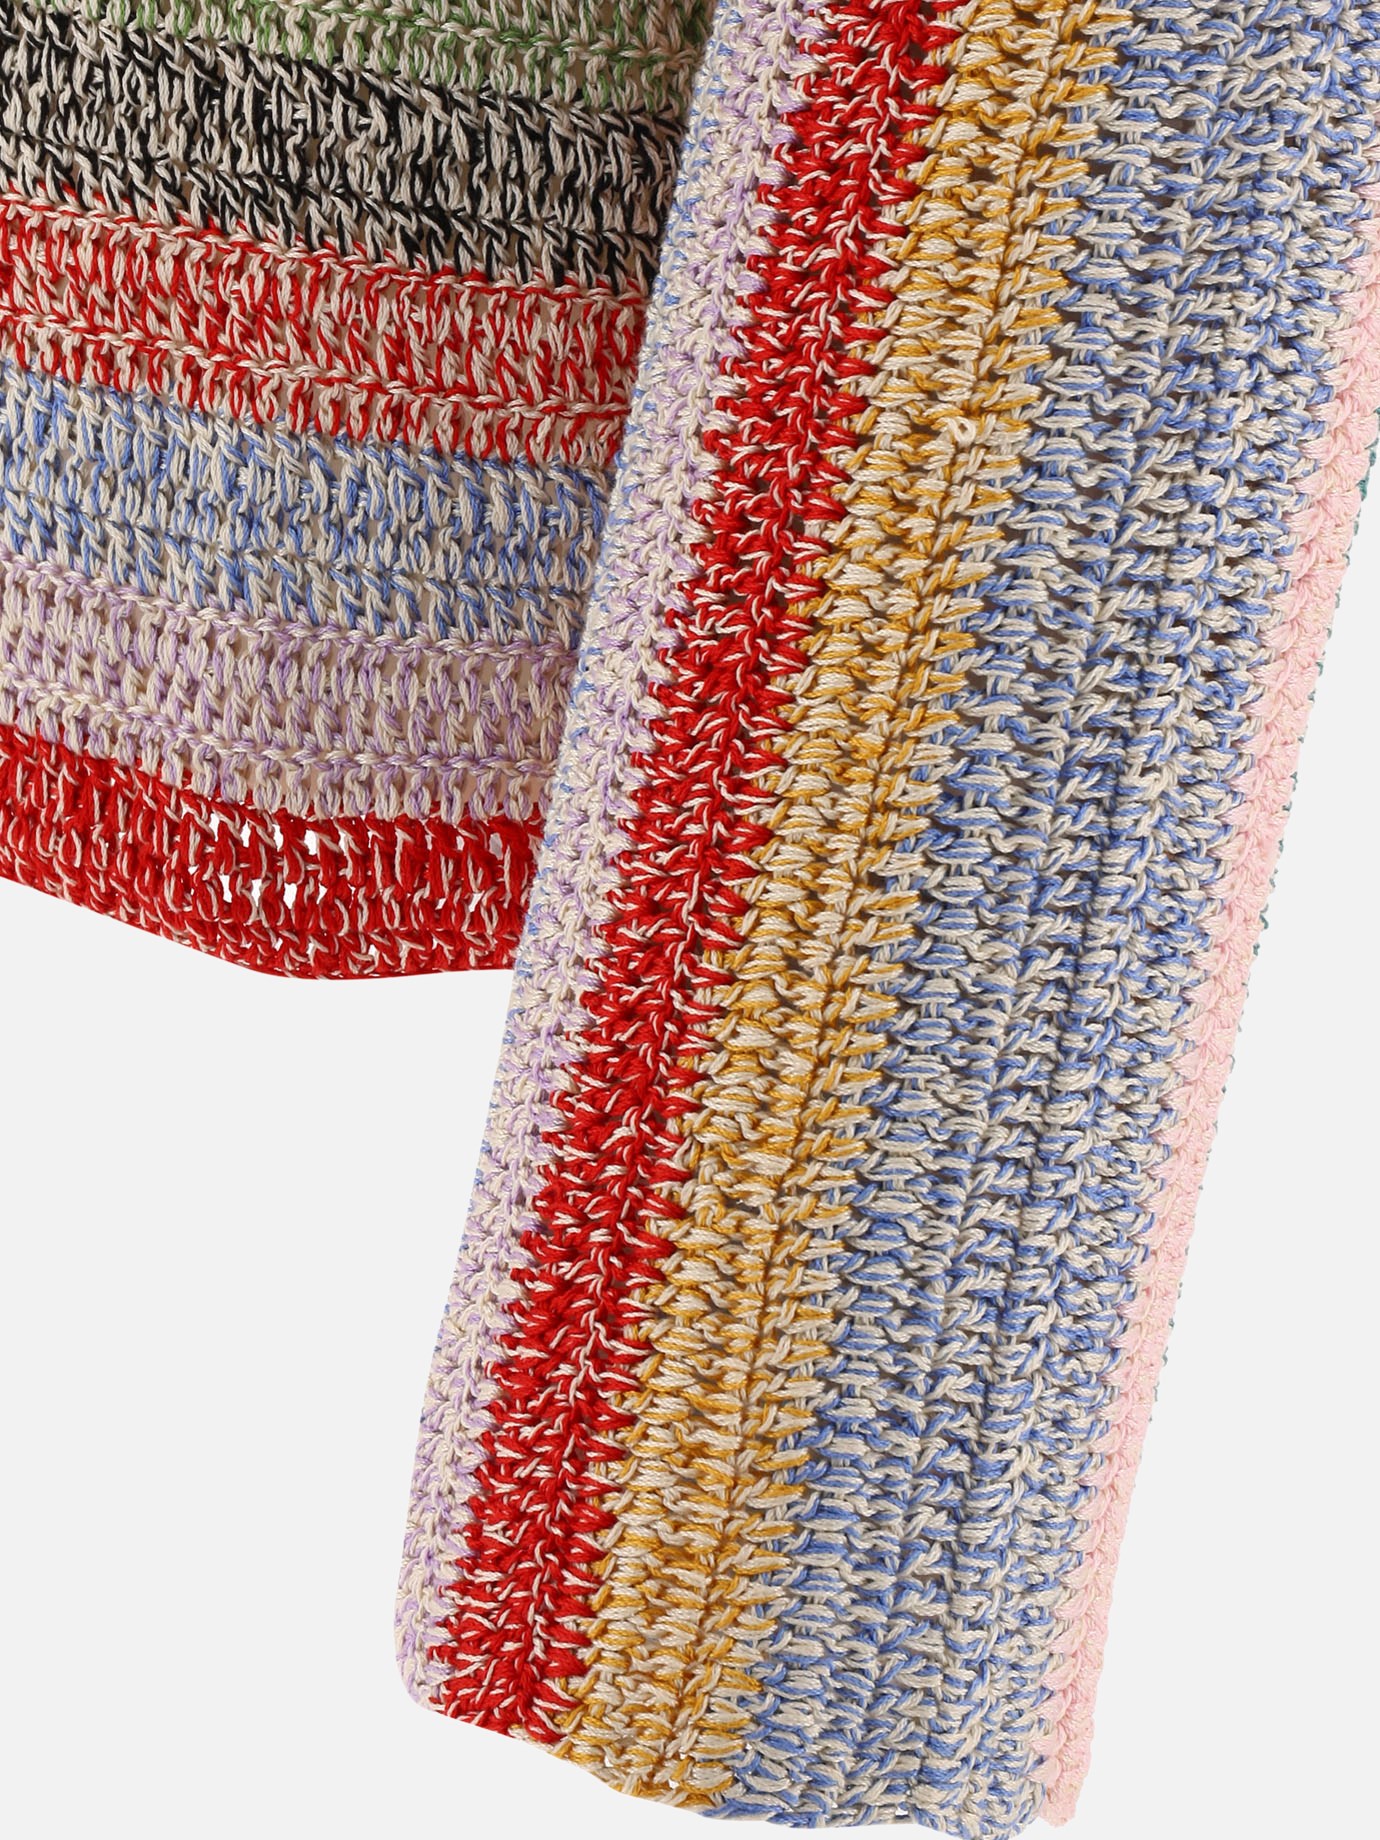 Maglione  Crochet Sampler  by Bode